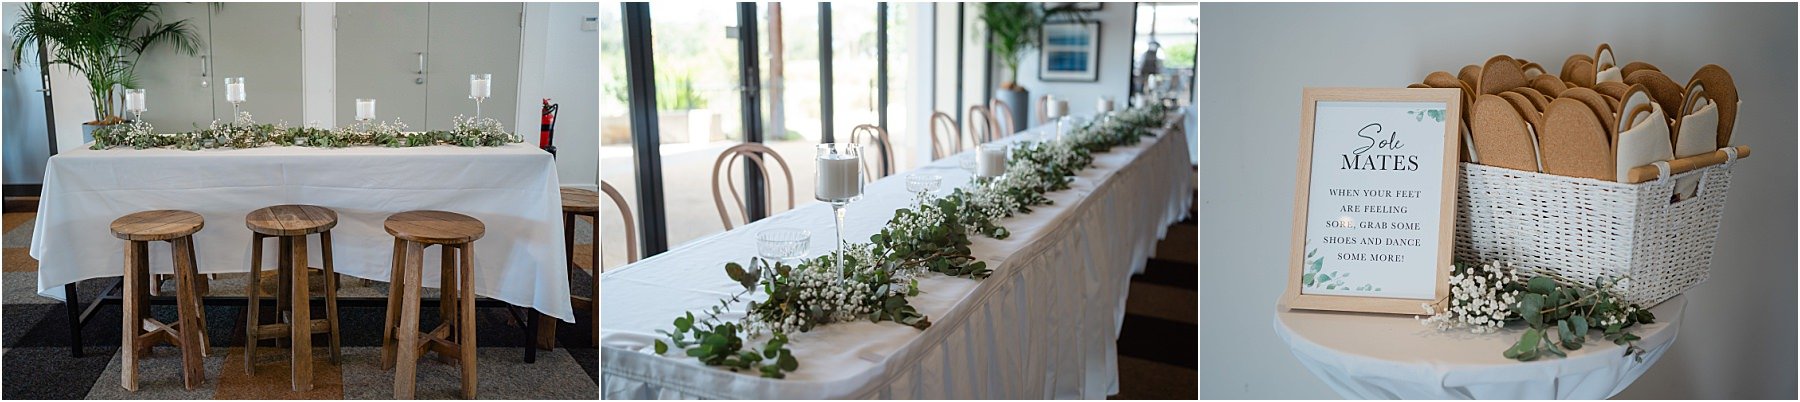 15-greenhouse-eatery-wedding-medowie-photography.jpg